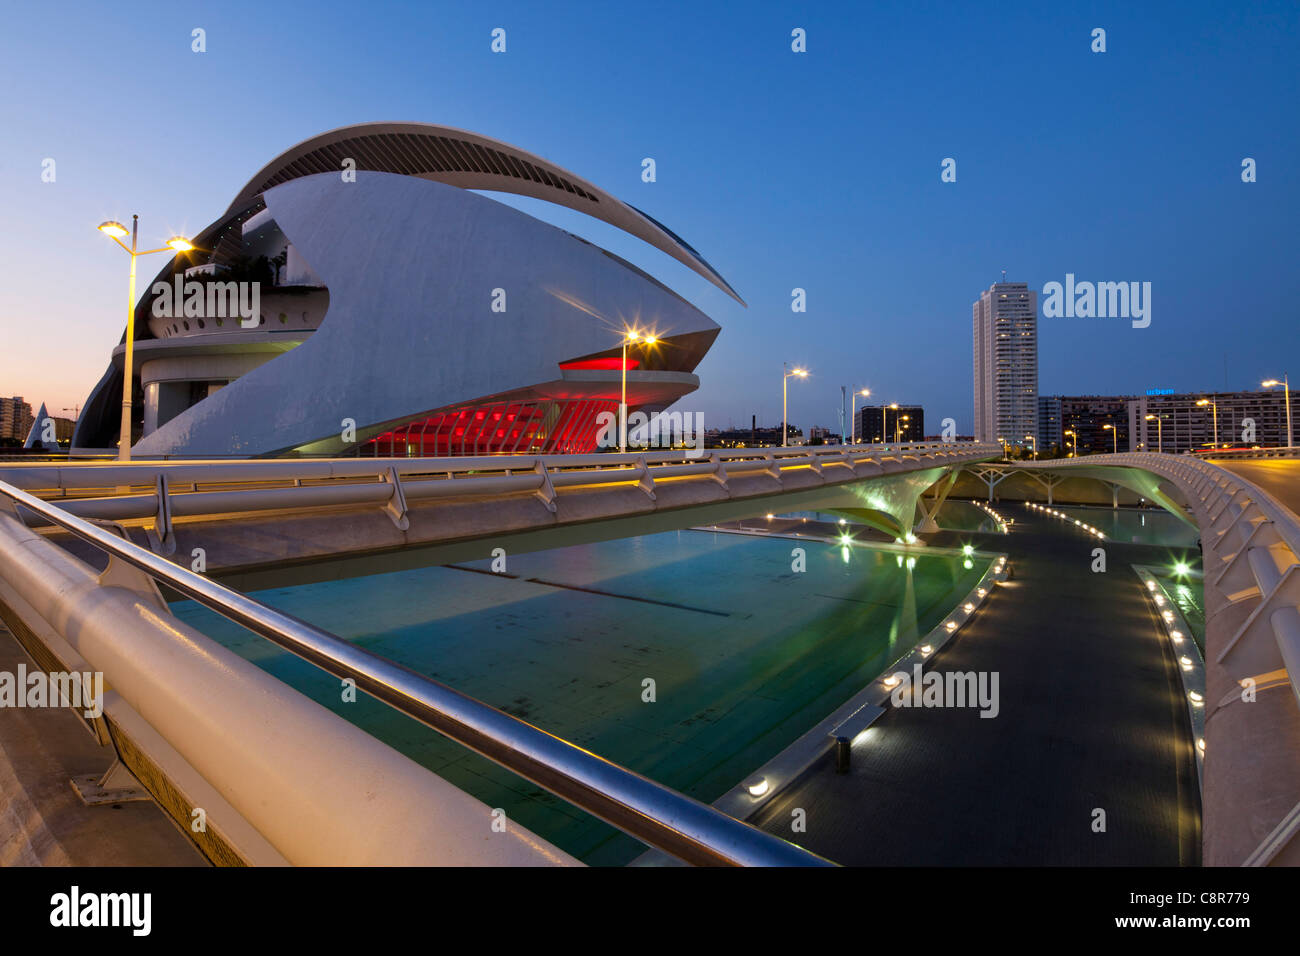 Das Palau de Les Arts Reina Sofia von Calatrava, Valencia, Spanien Stockfoto